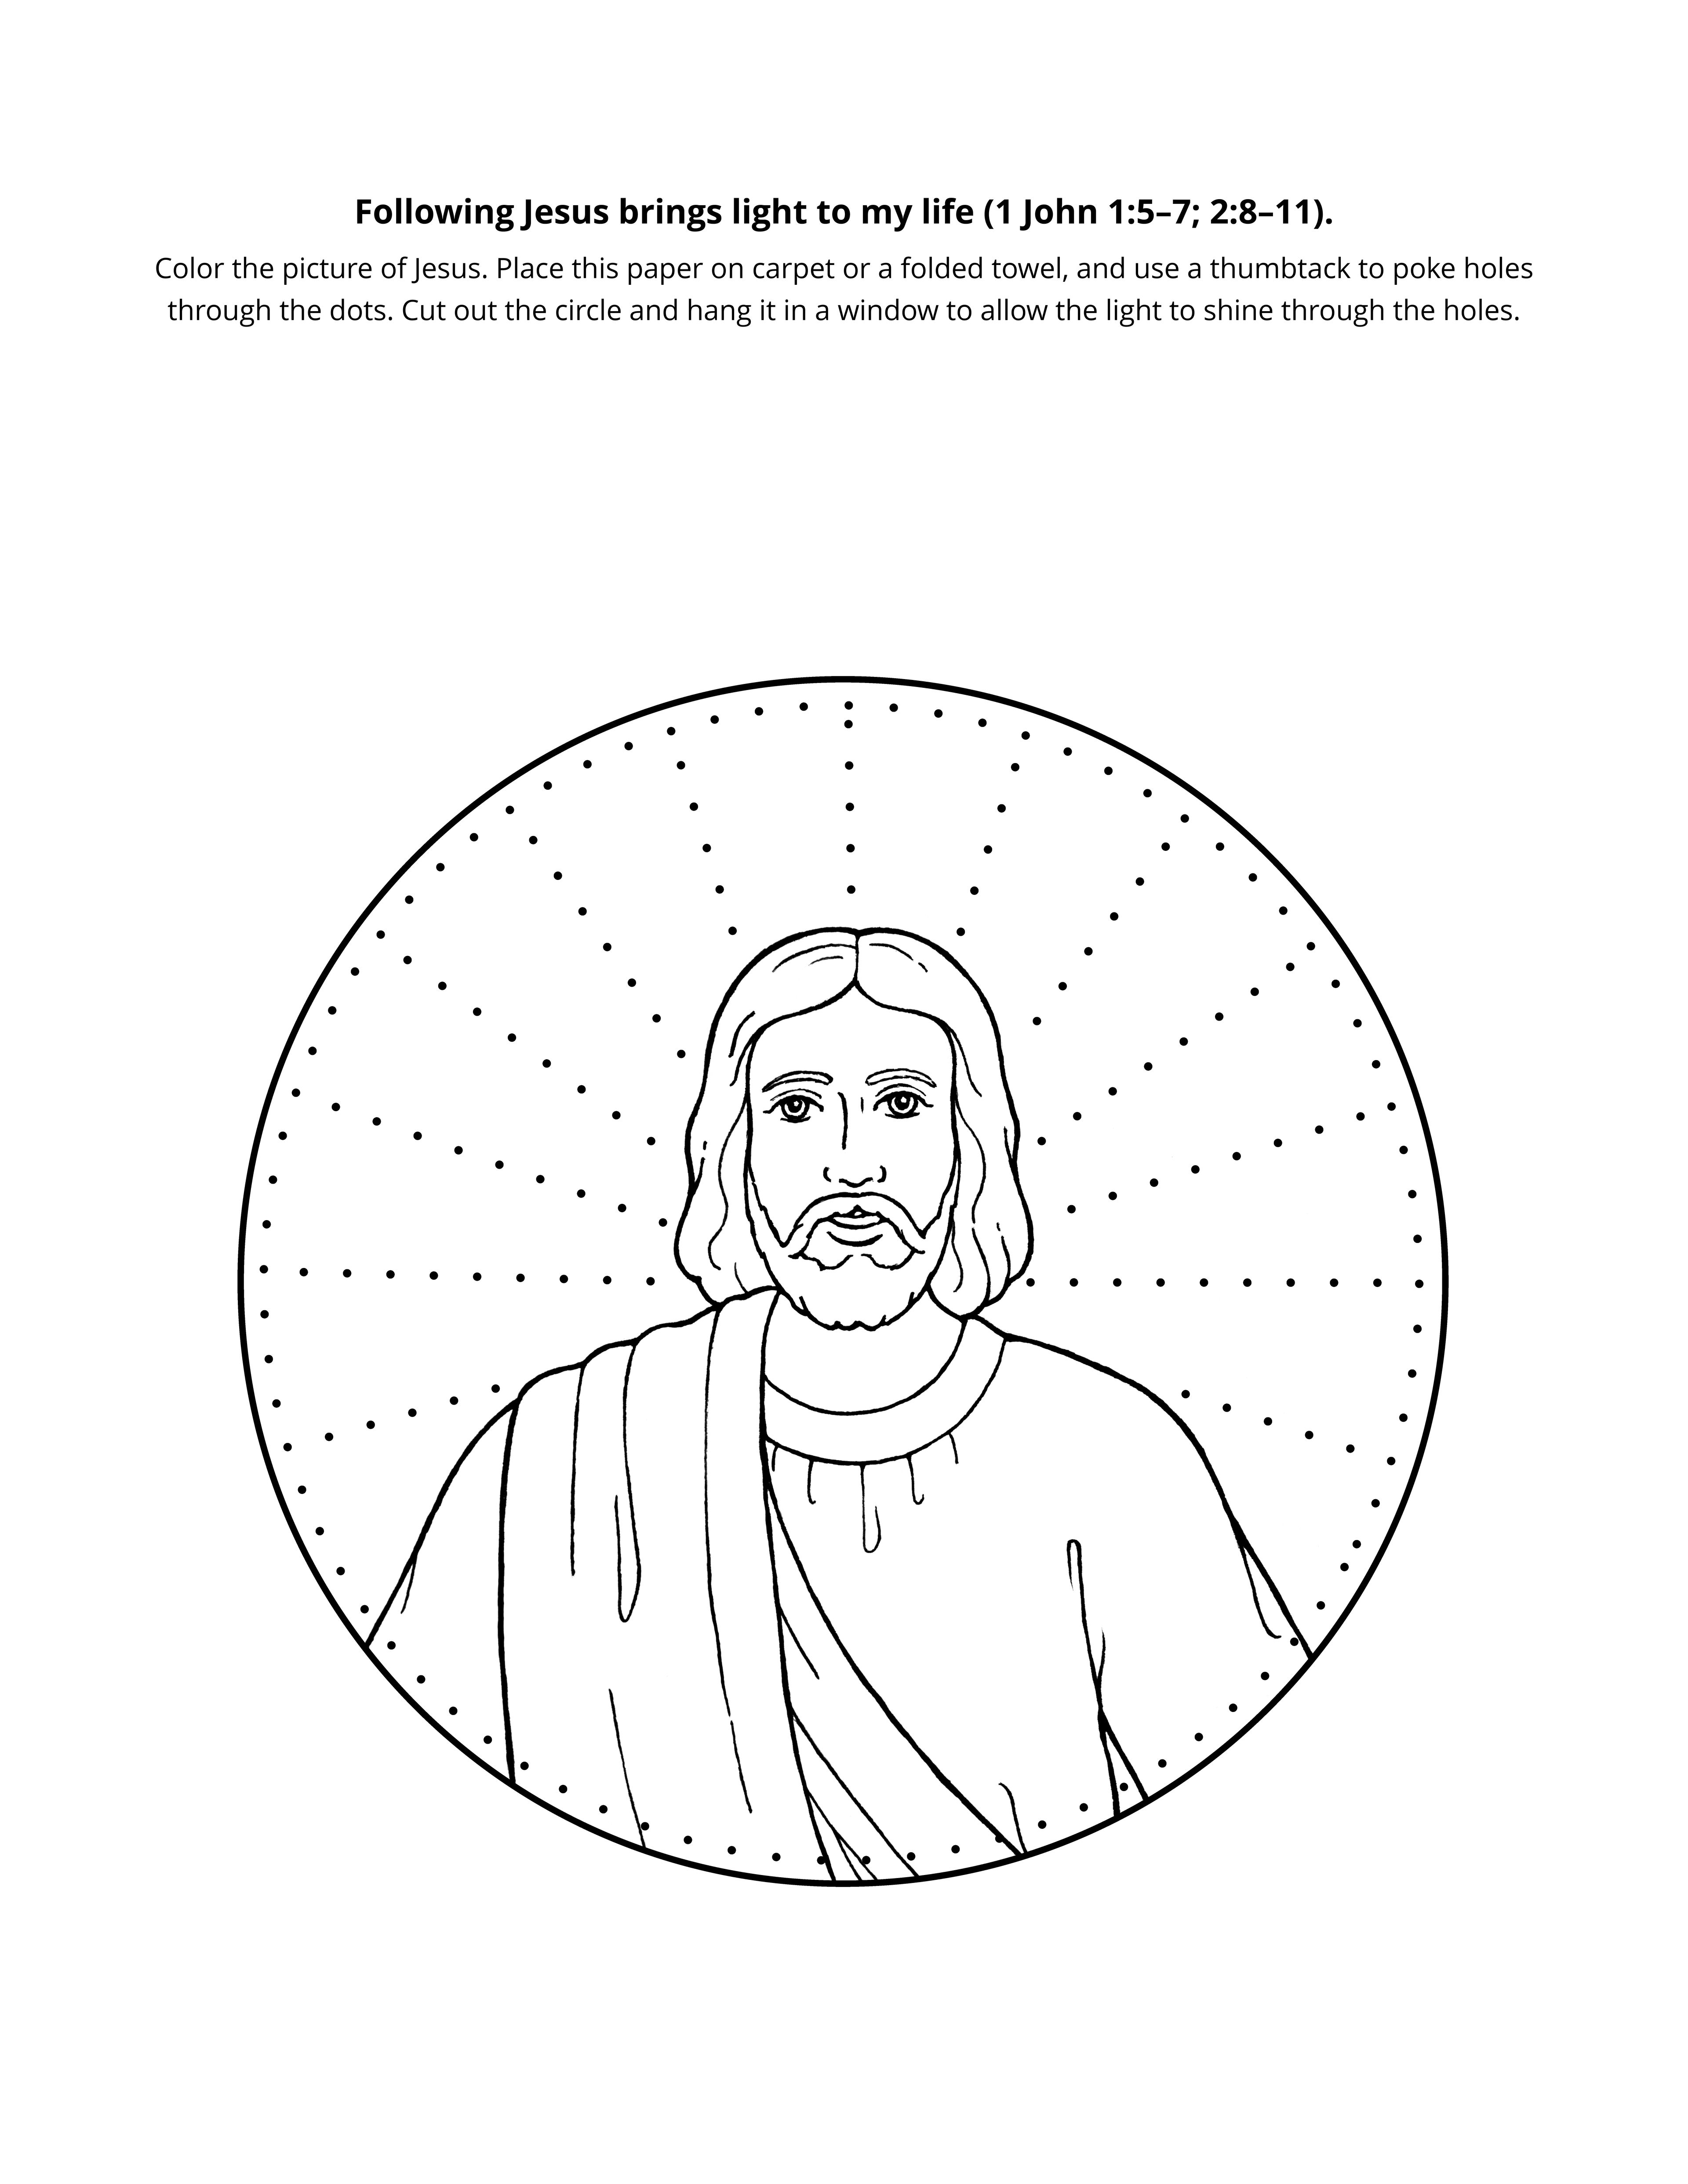 An illustration of Jesus Christ.